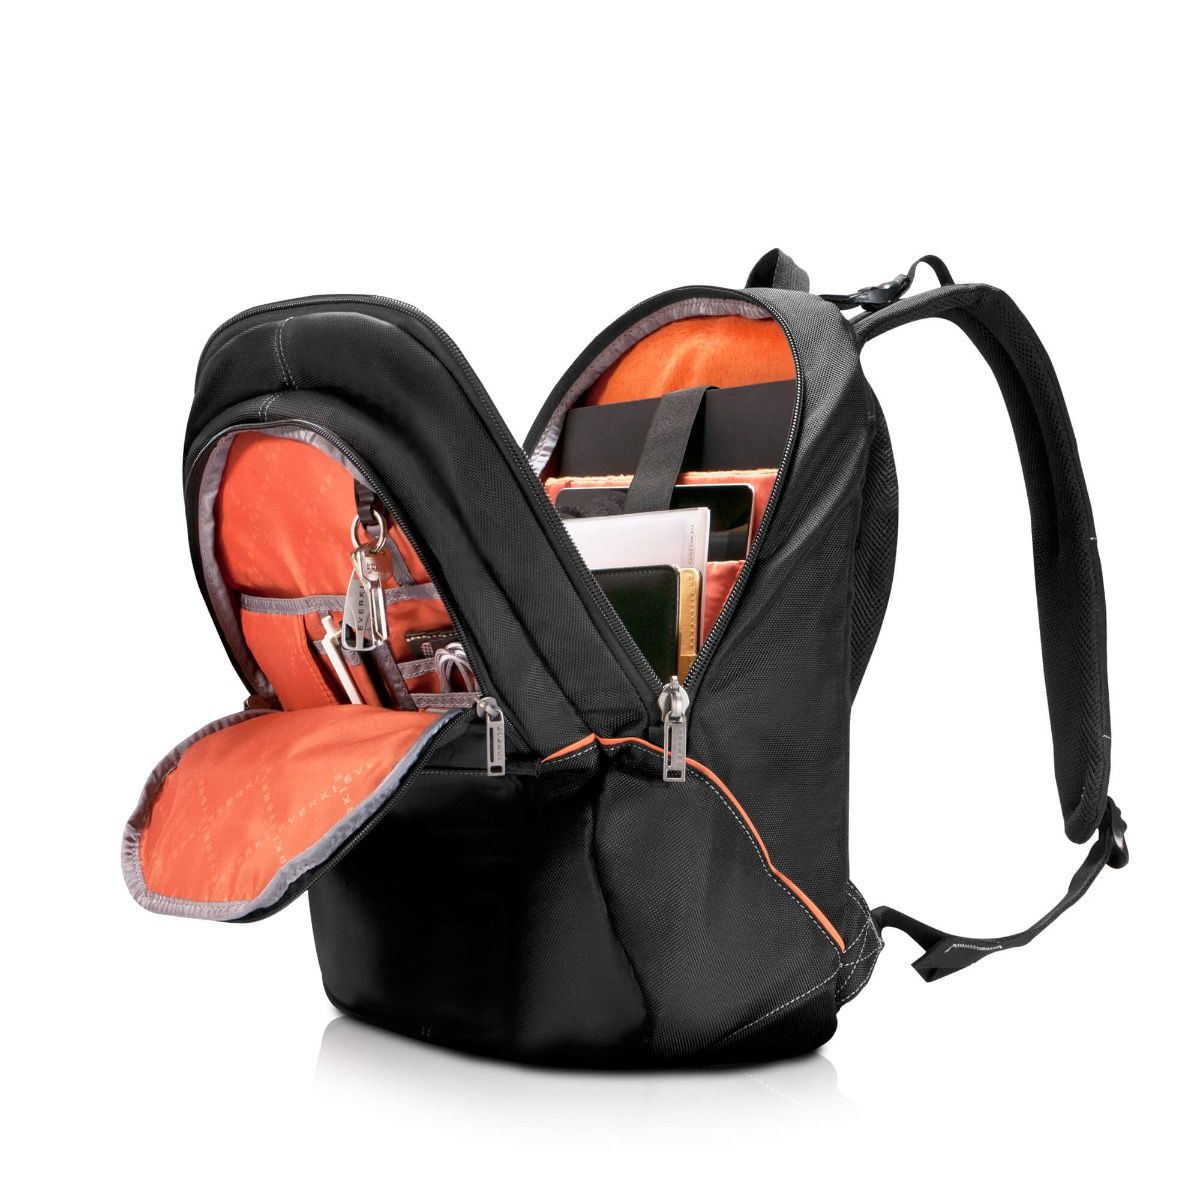 Everki 17.3" Glide Backpack